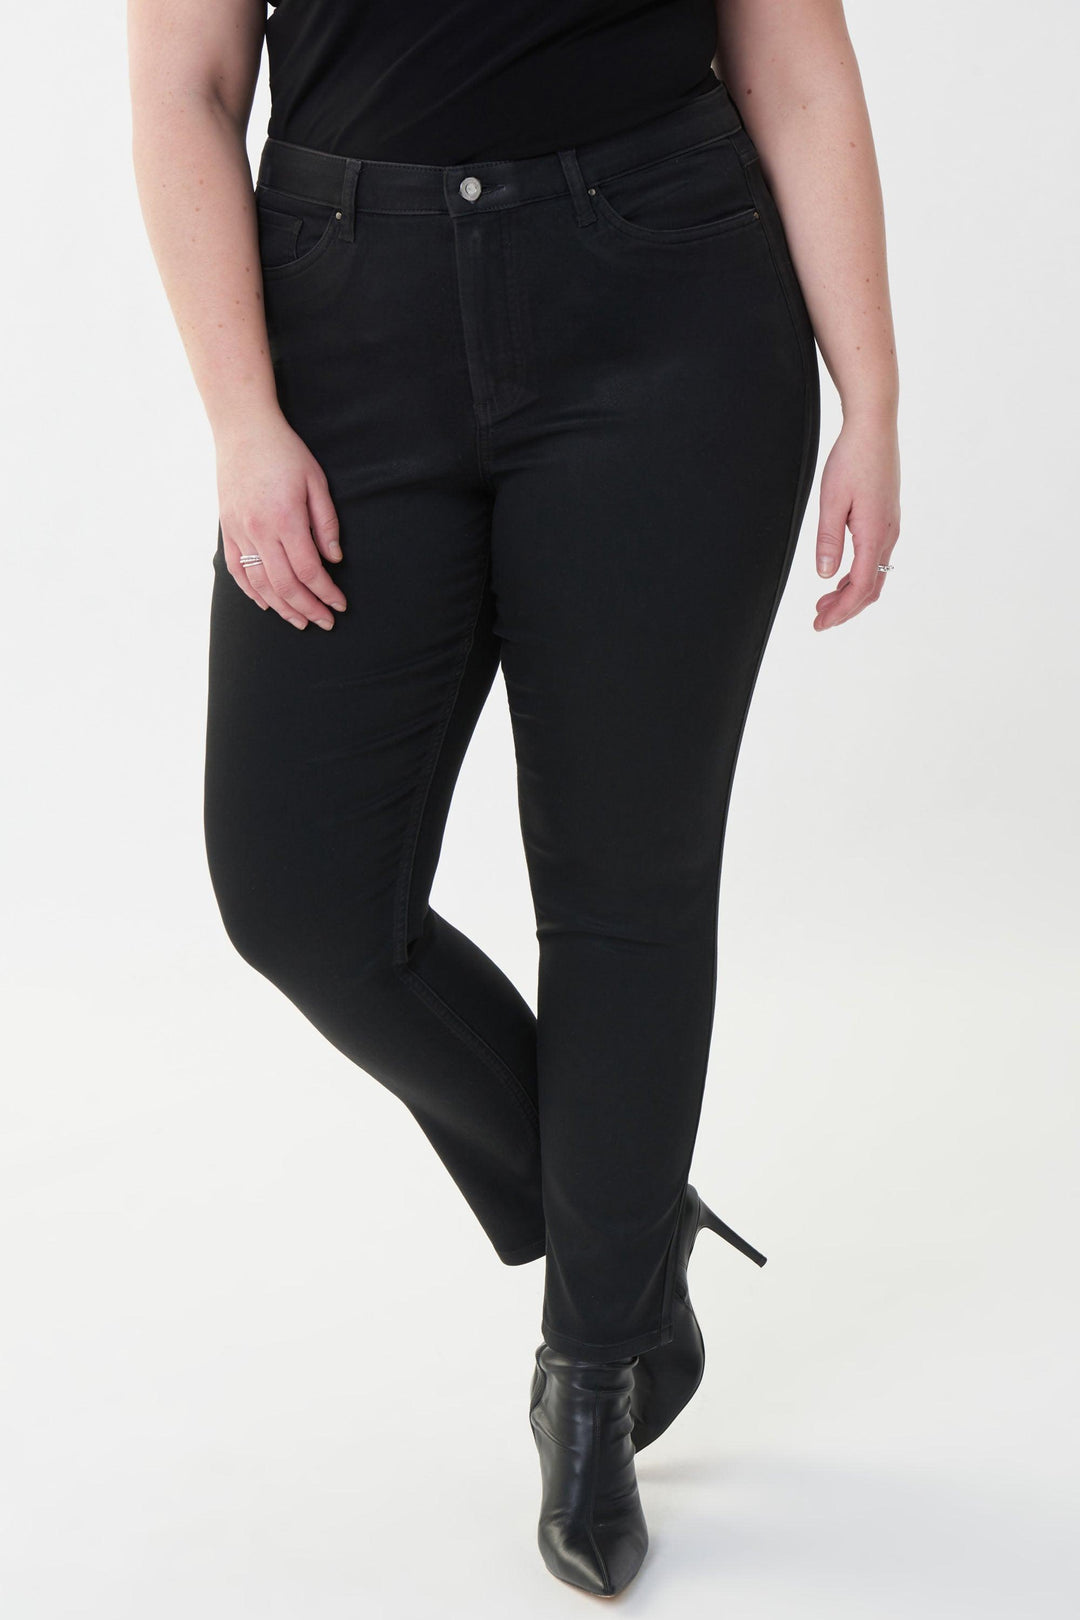 Joseph Ribkoff Black Trouser Style 223933 - AW22, Black, New, Trouser ginasmartboutique